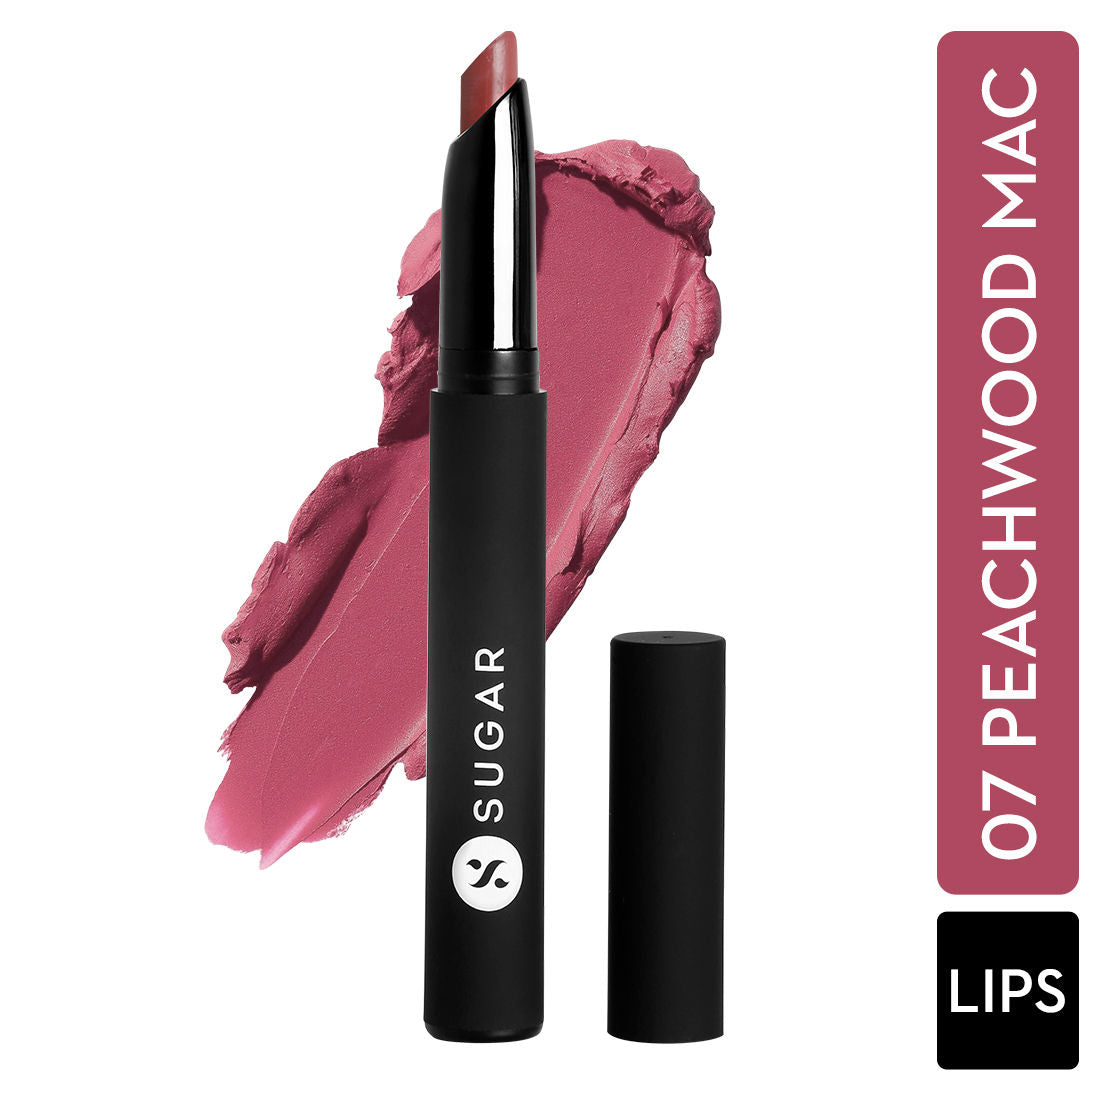 Sugar Matte Attack Transferproof Lipstick - 07 Peachwood Mac (Peach Pink) (2G)